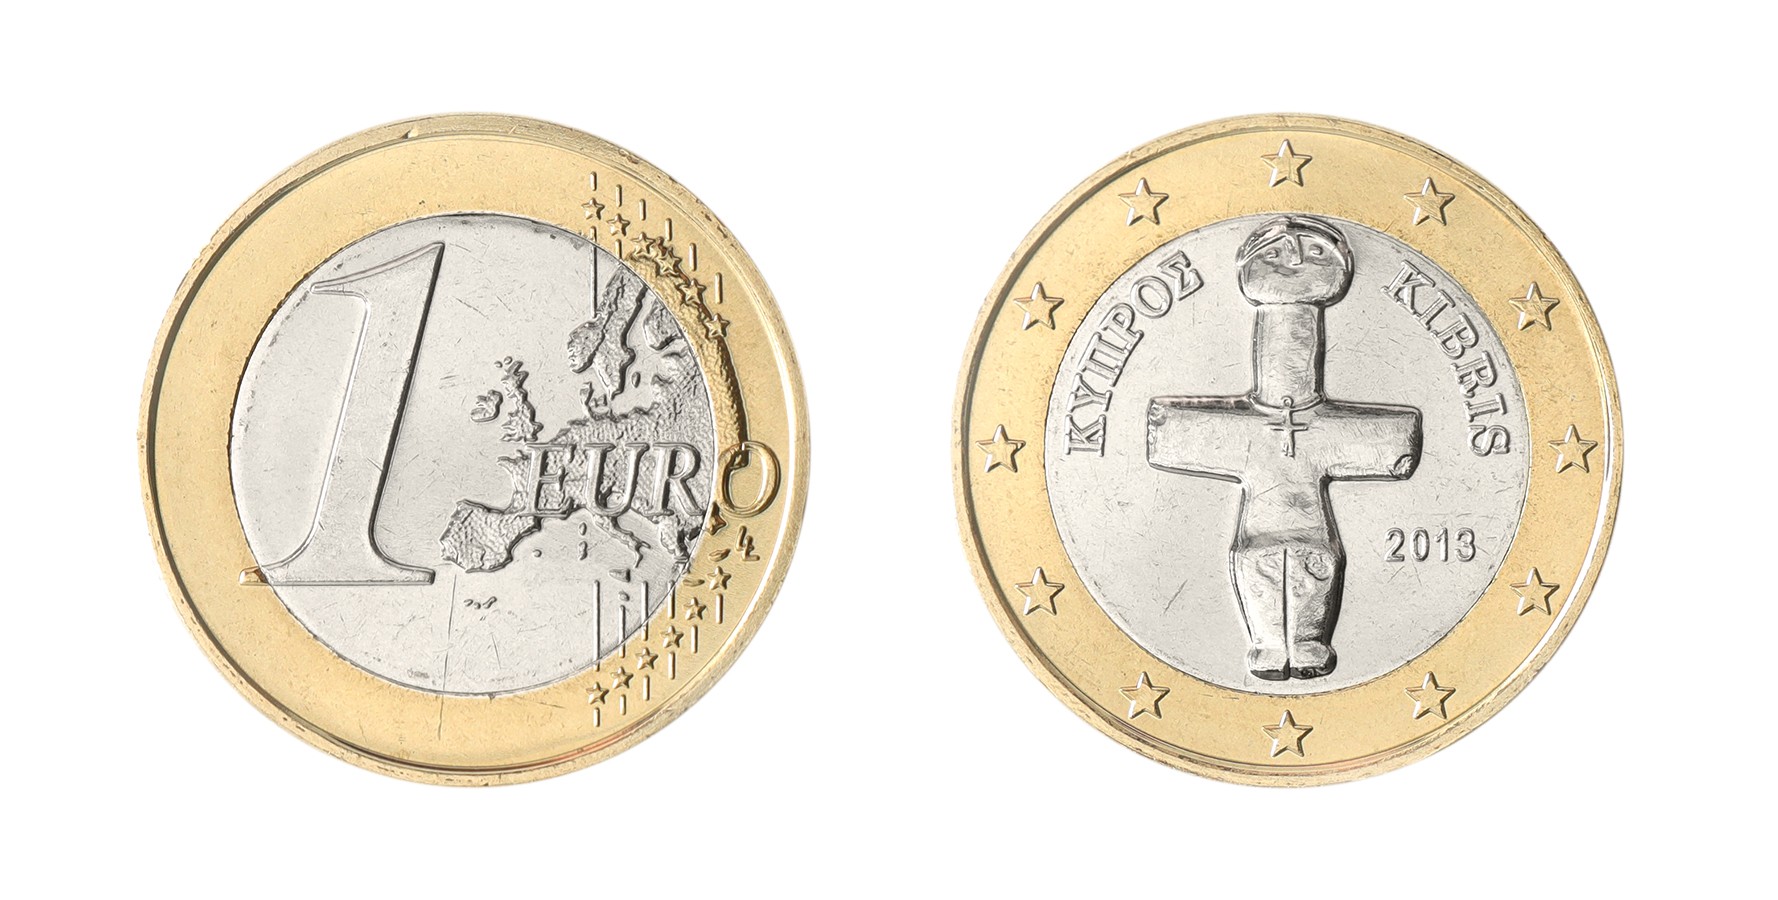 1 euro cent coin - Wikipedia